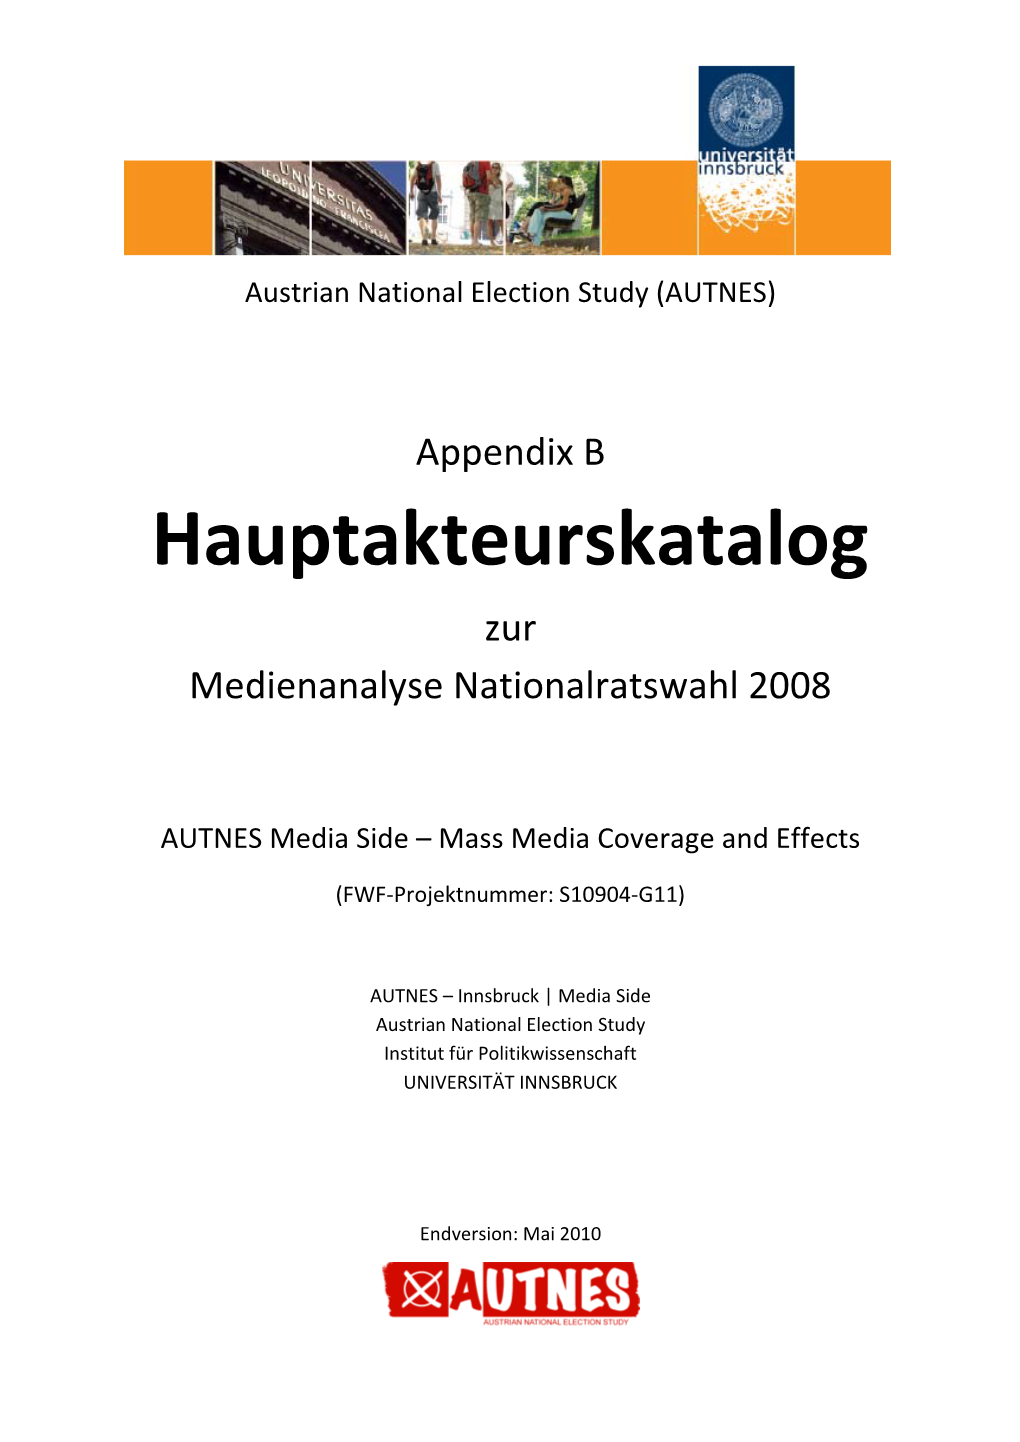 Hauptakteurskatalog Zur Medienanalyse Nationalratswahl 2008